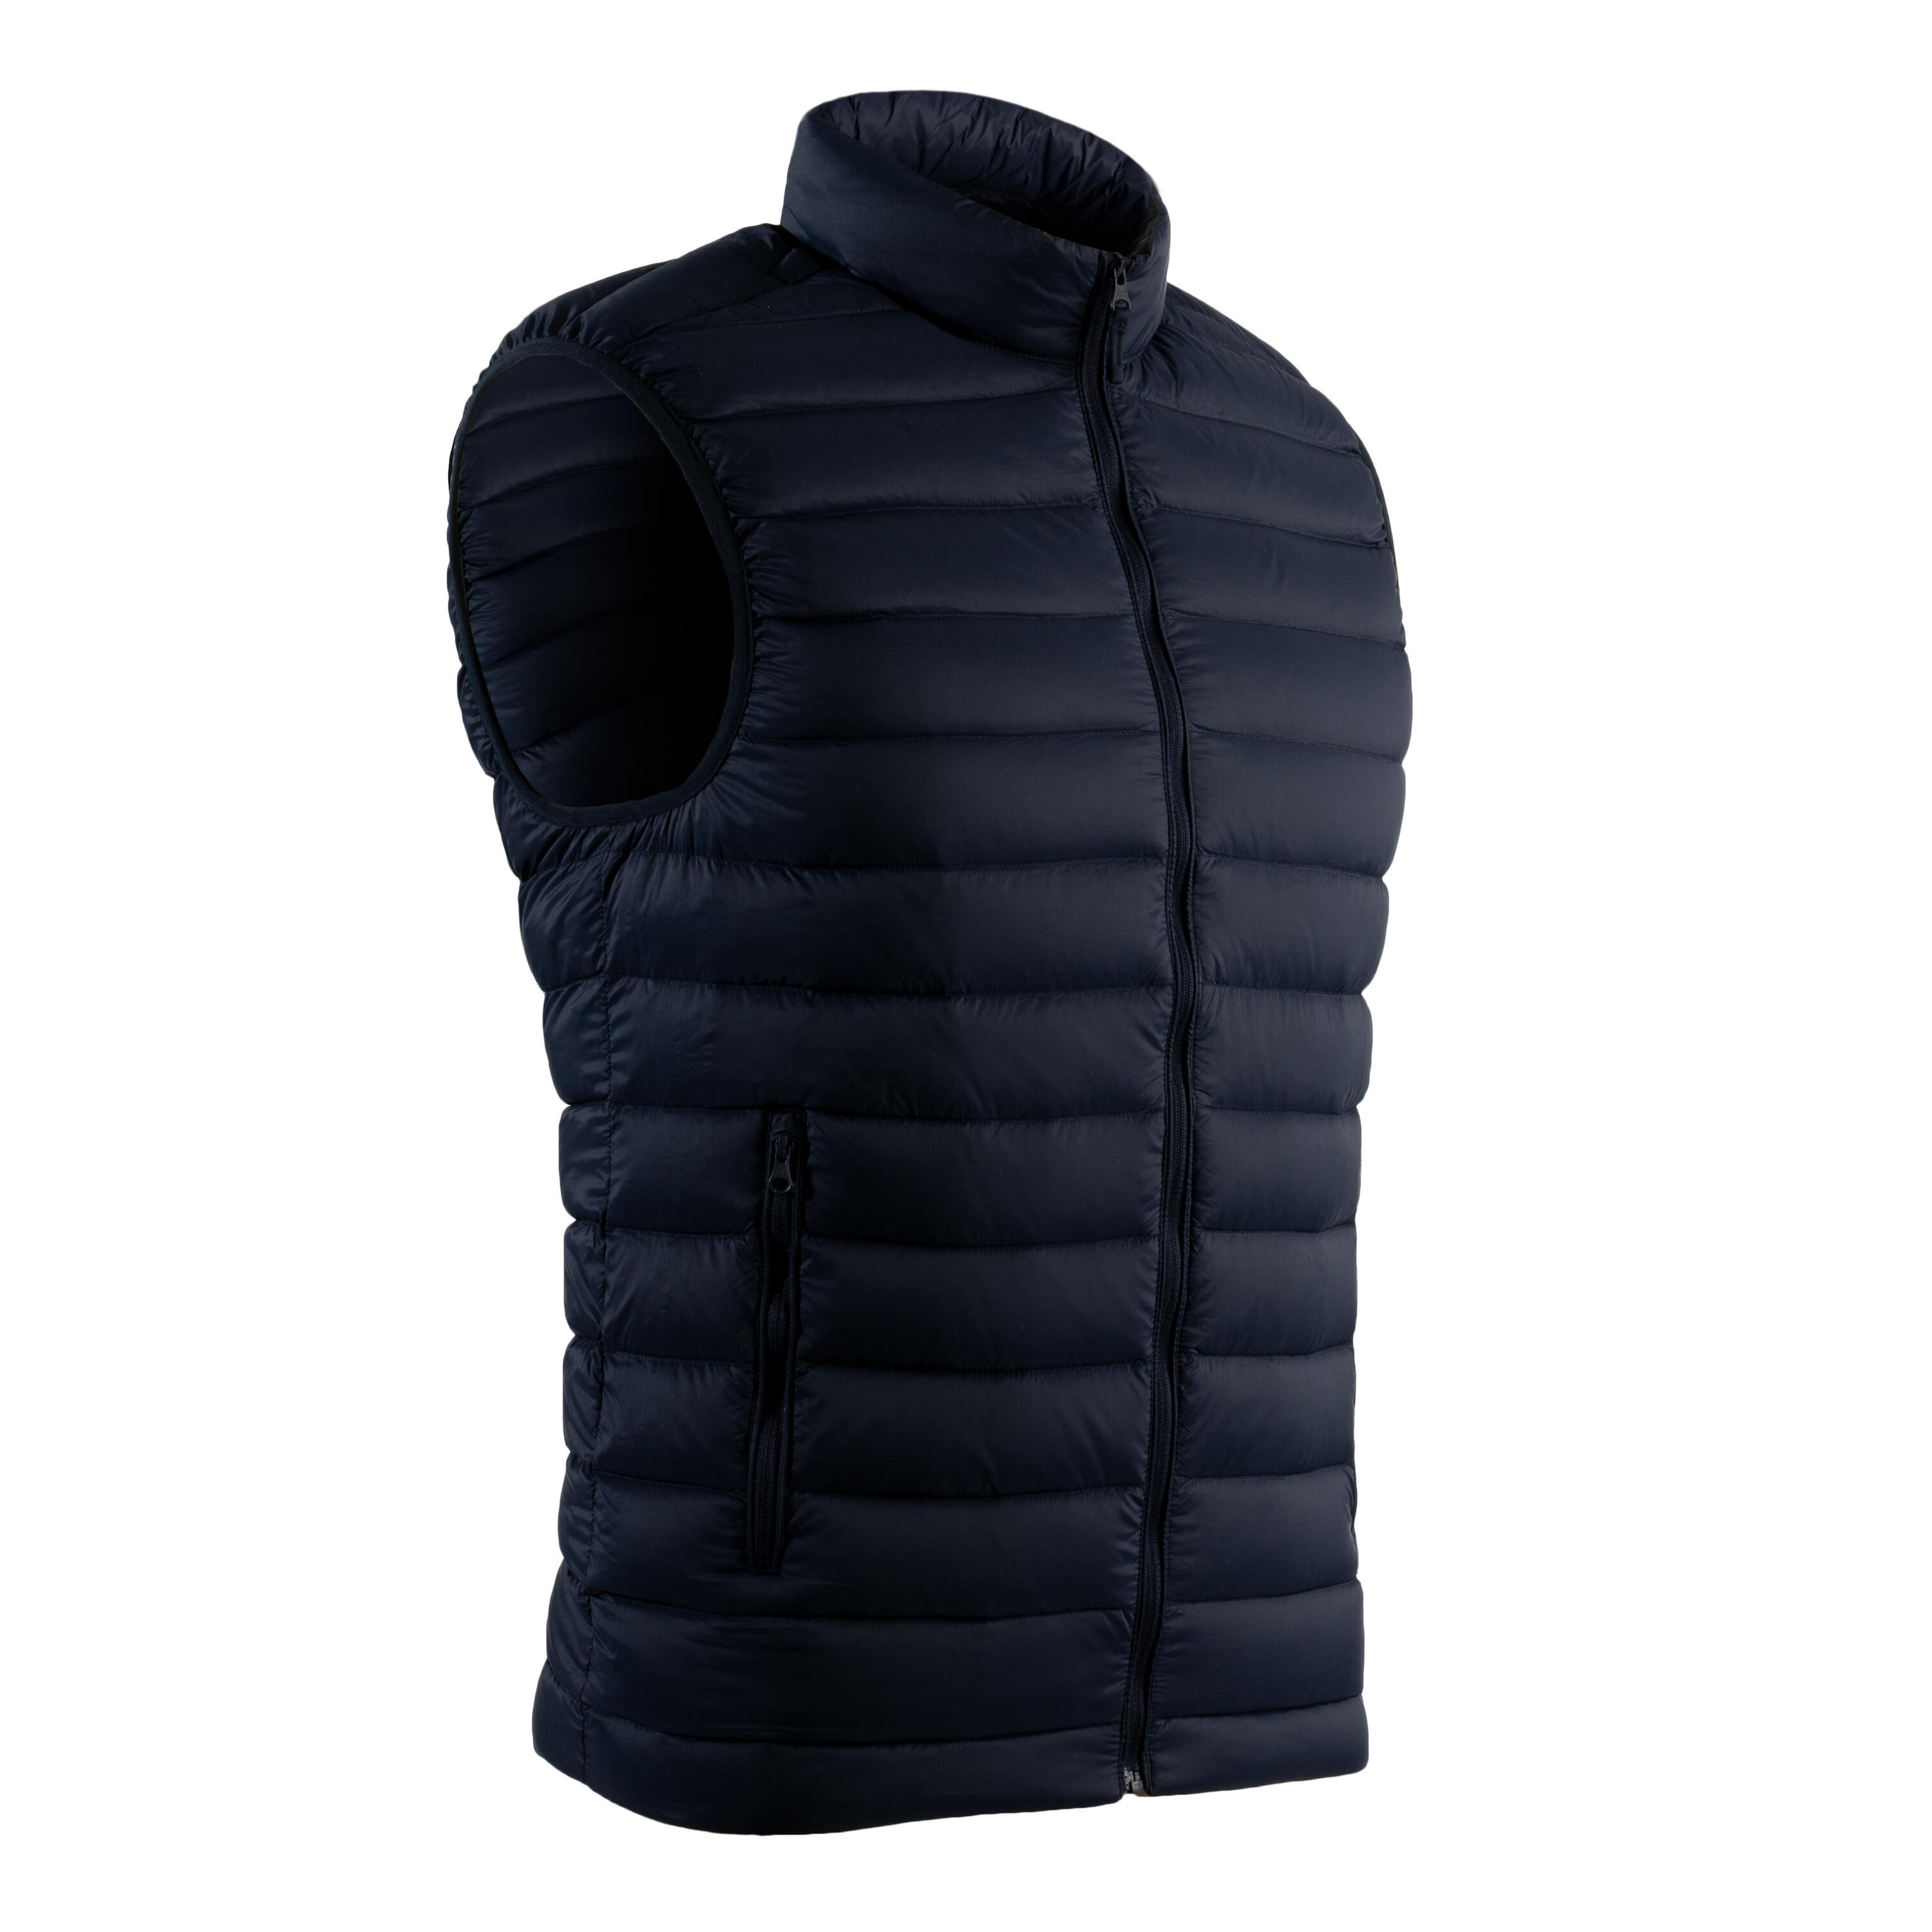 Men's sleeveless down golf jacket - MW500 navy blue 10/10